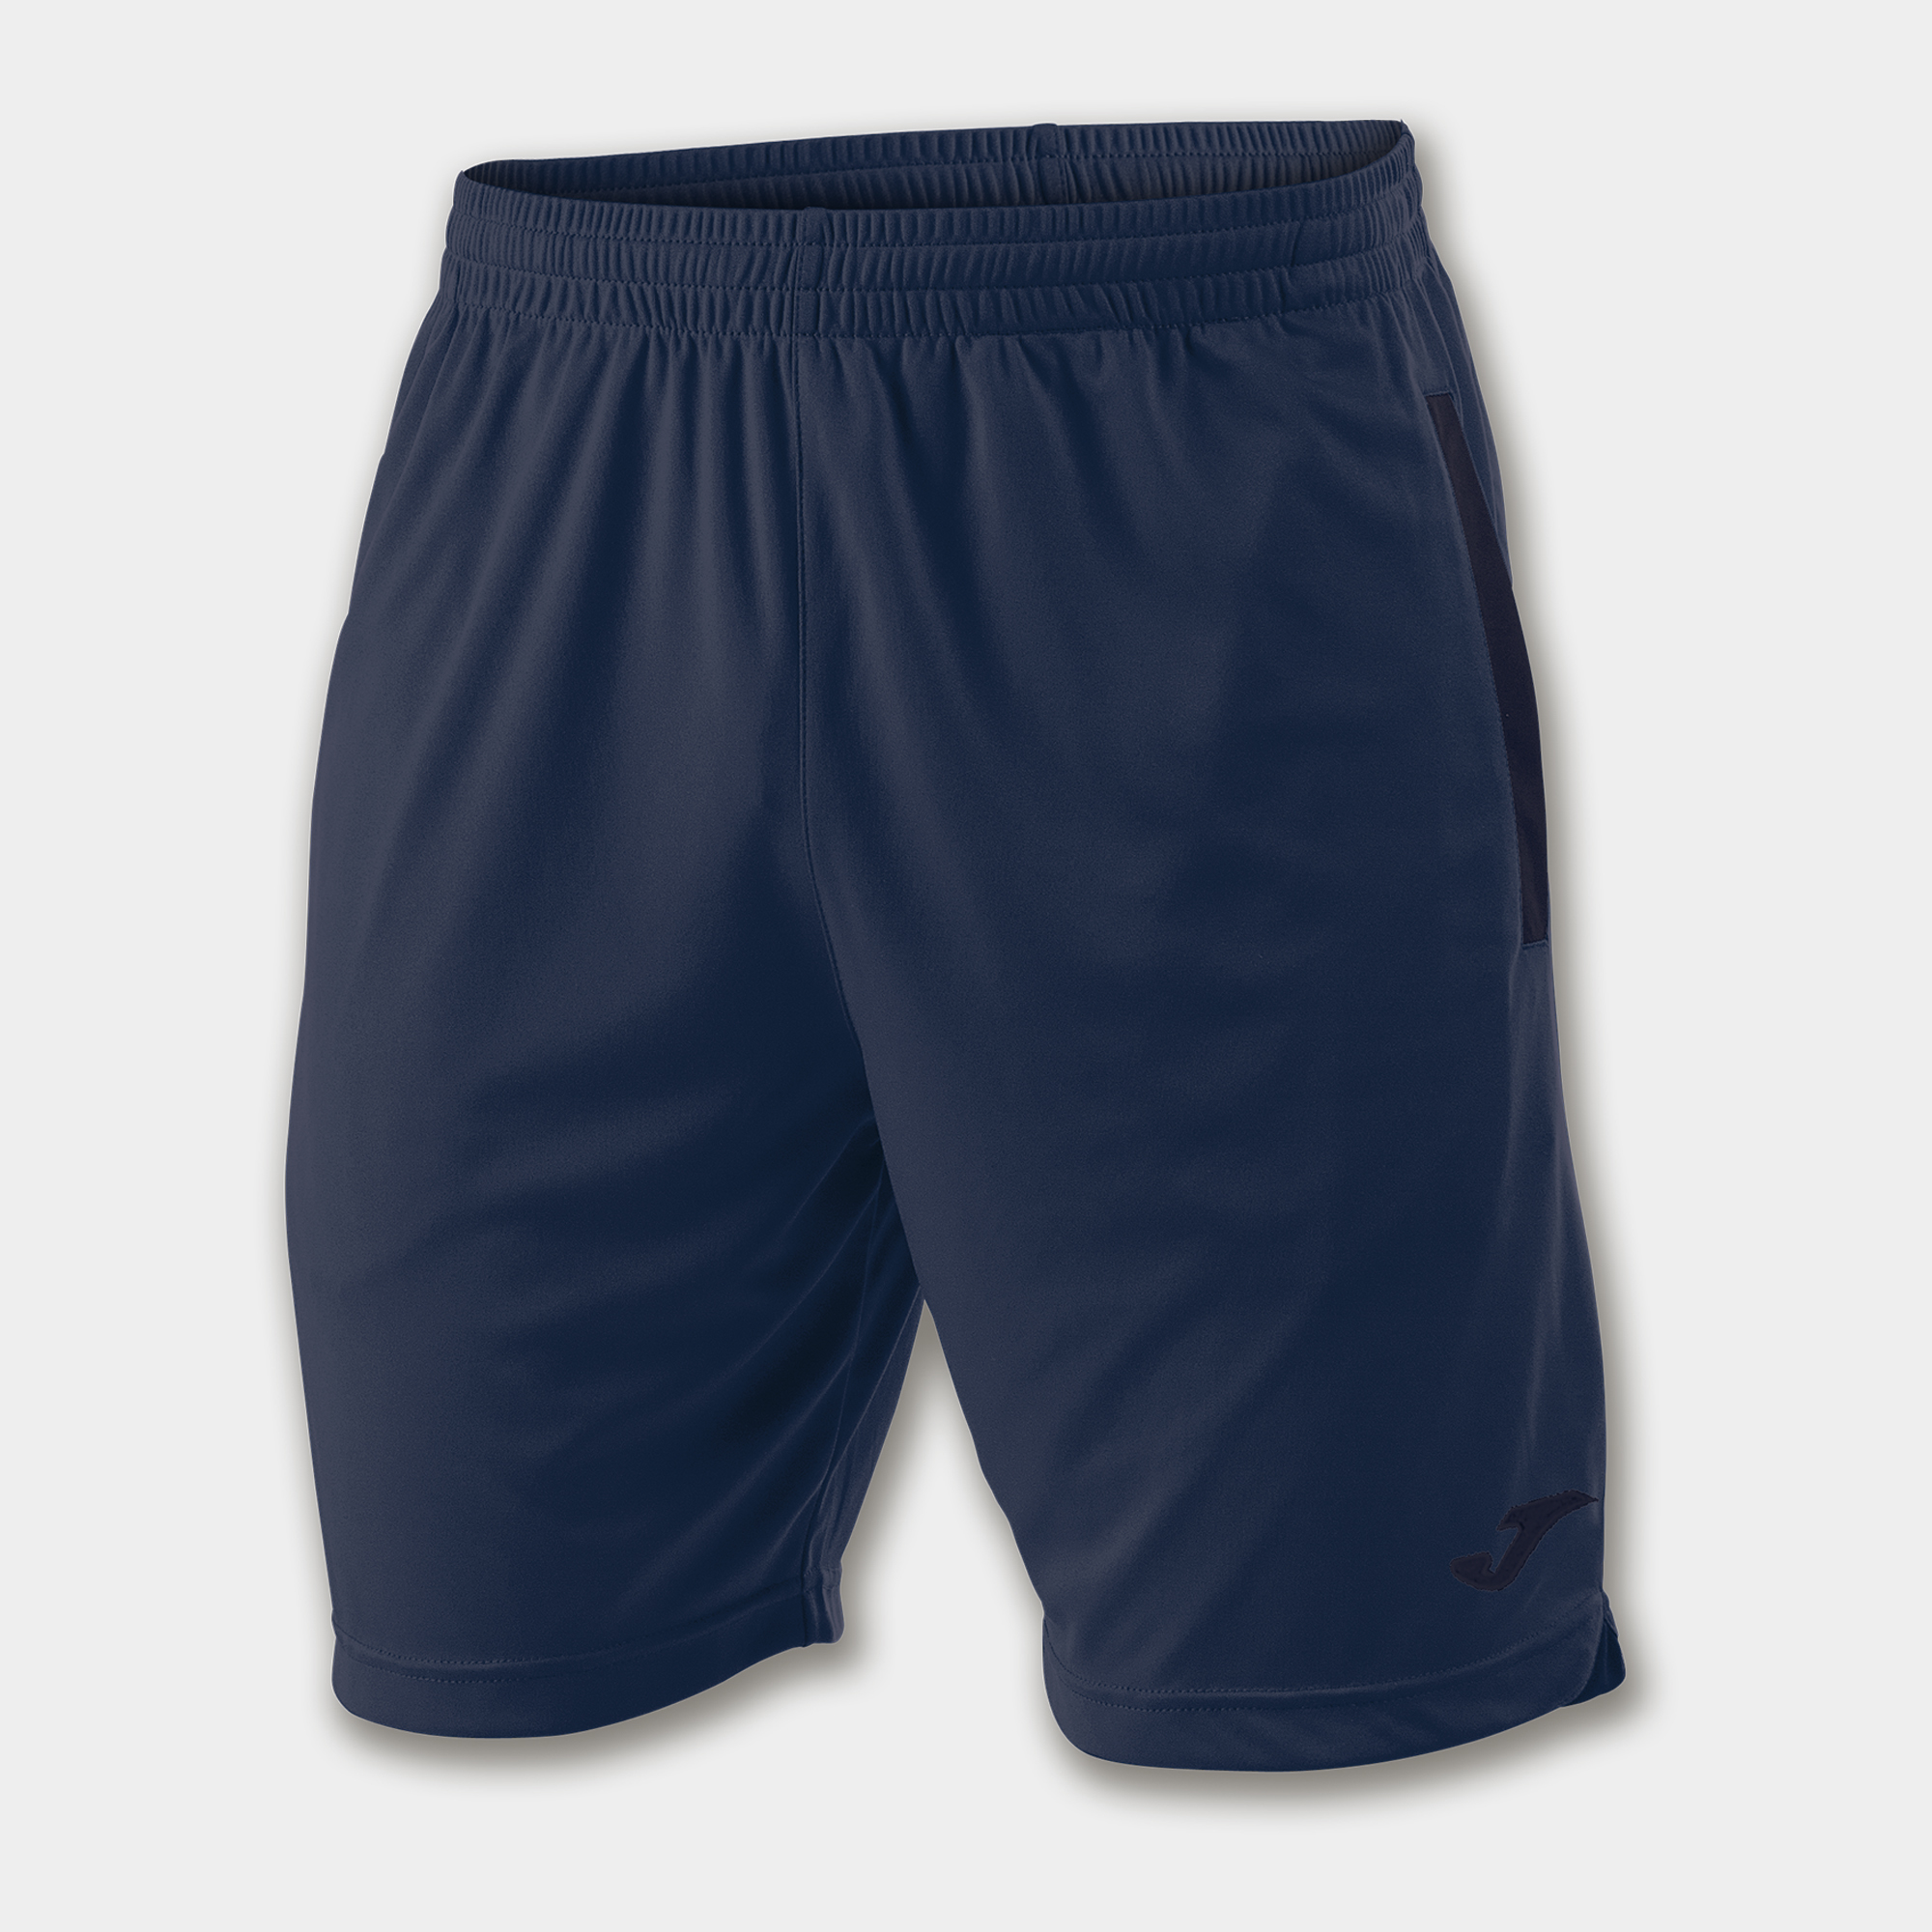 Bermuda shorts man Miami navy blue